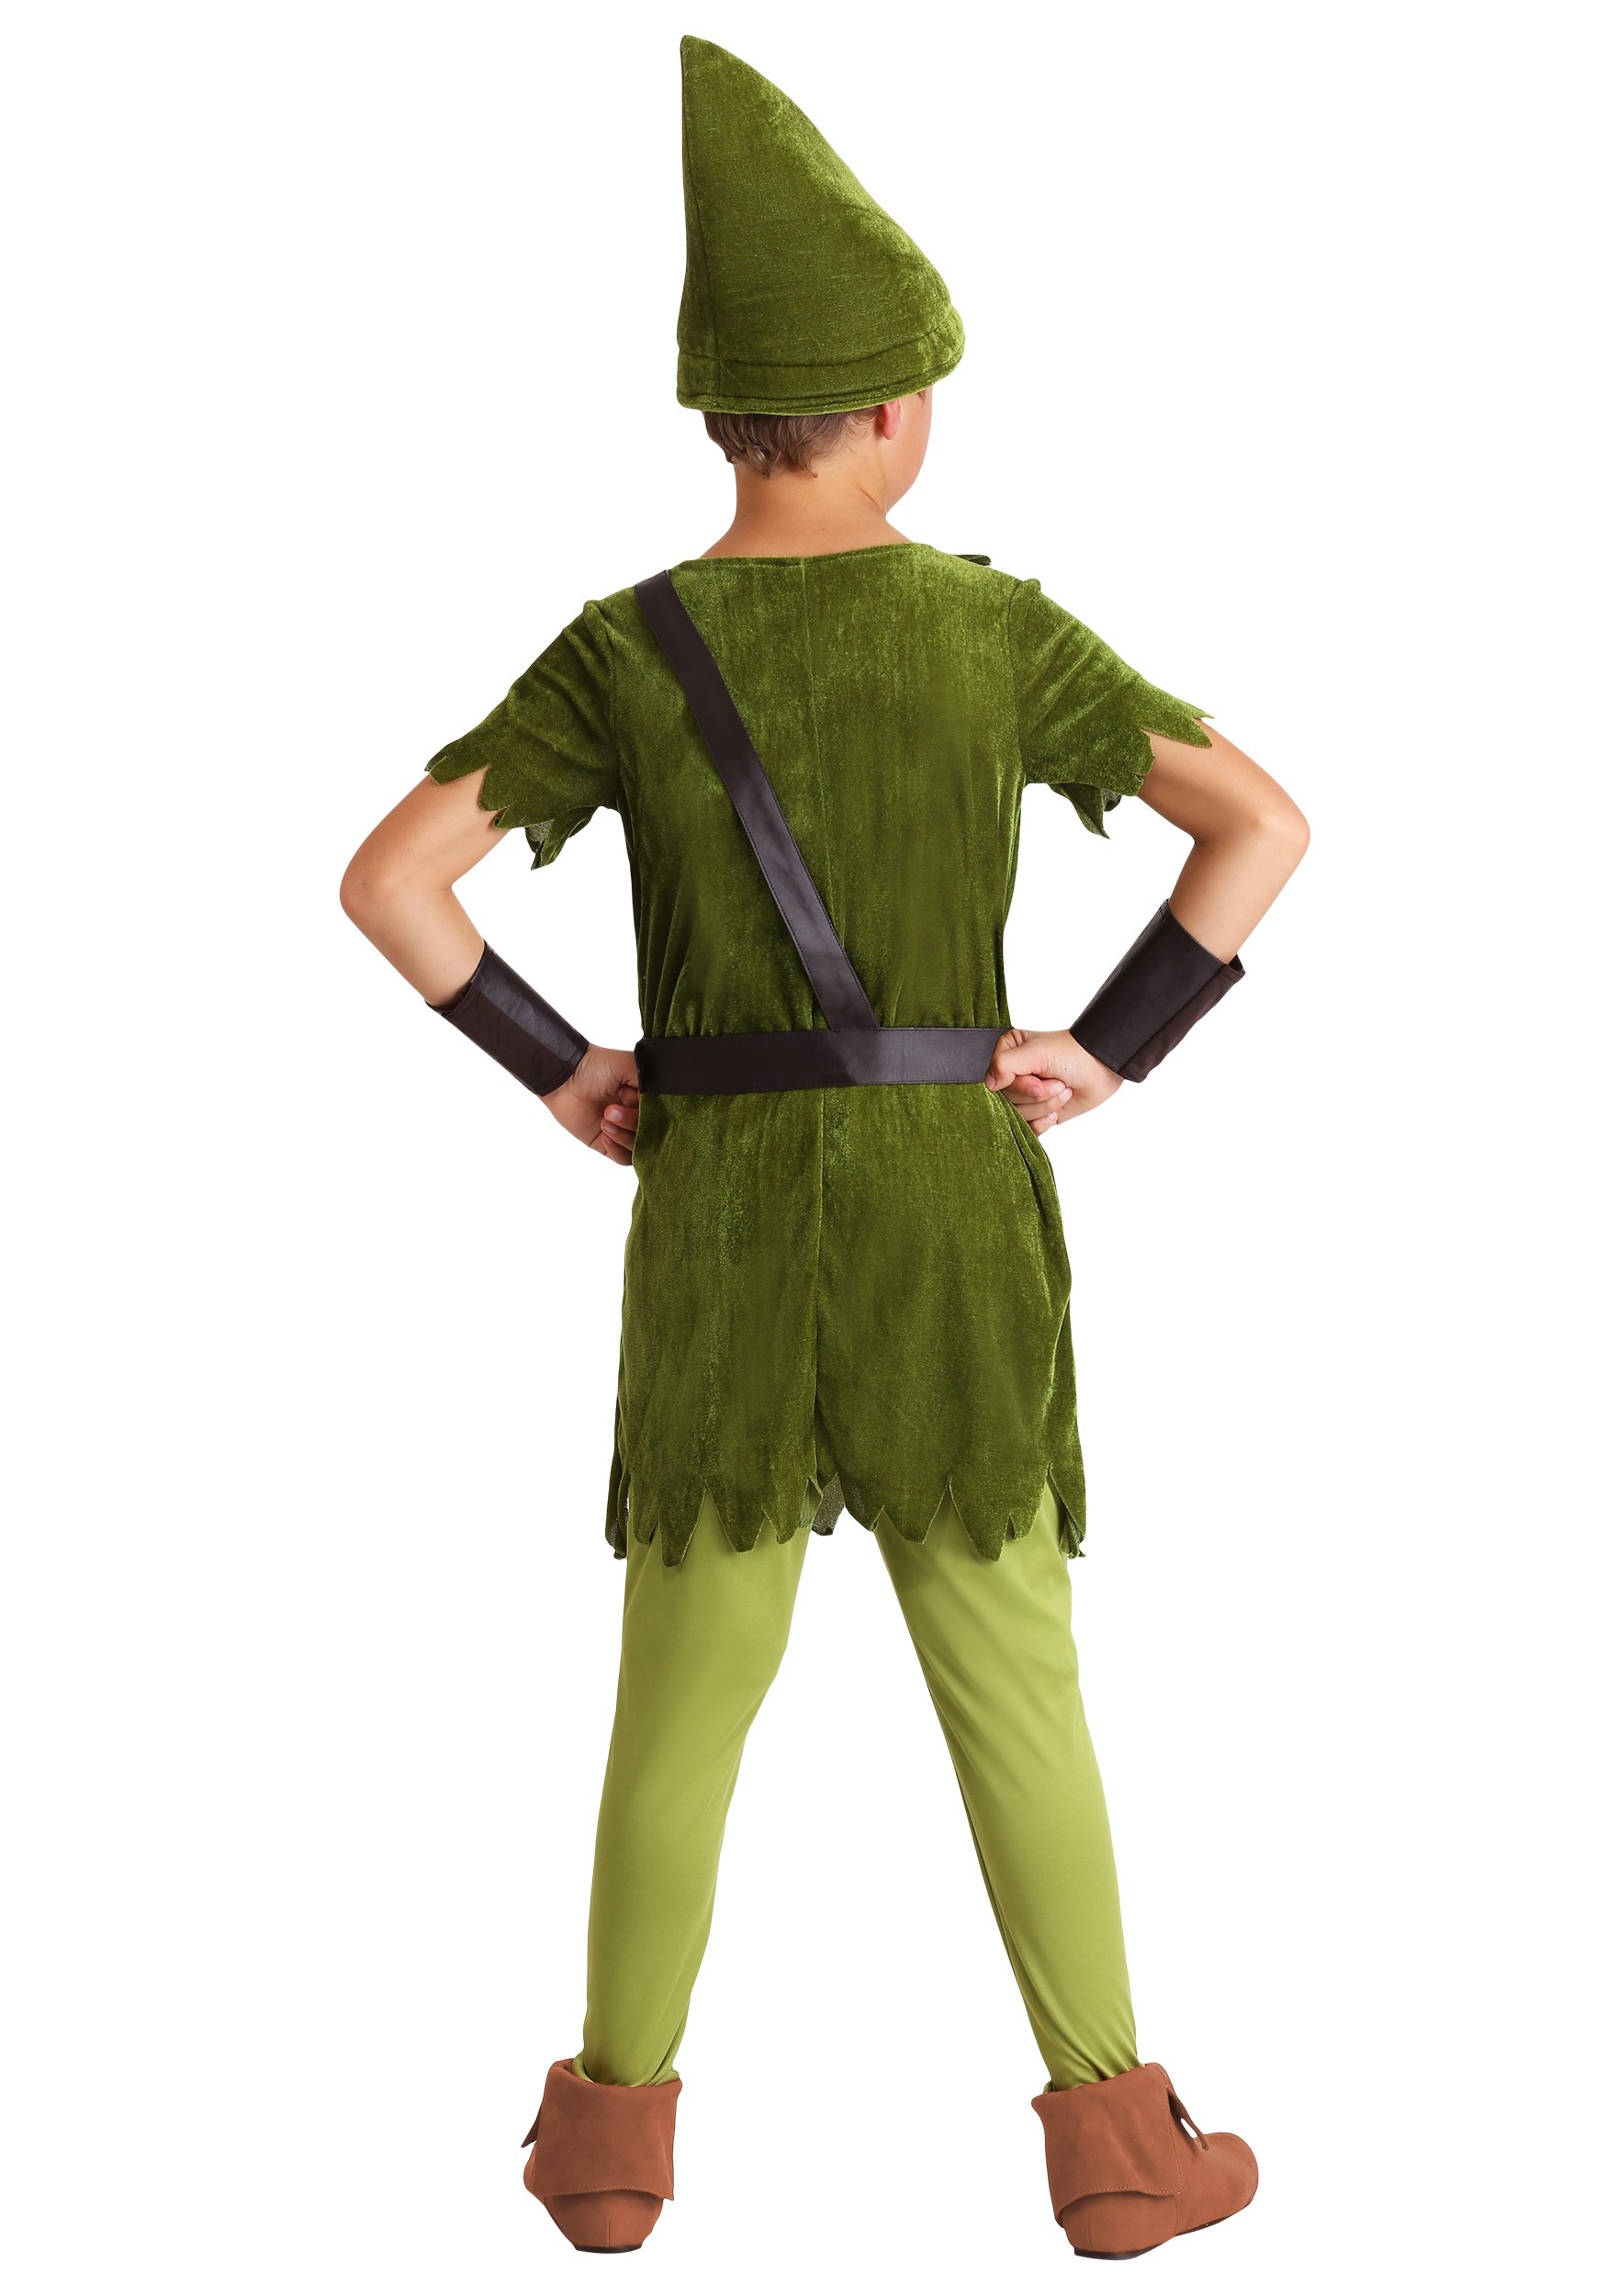 Disney Peter Pan Costume Accessory Set for Boys